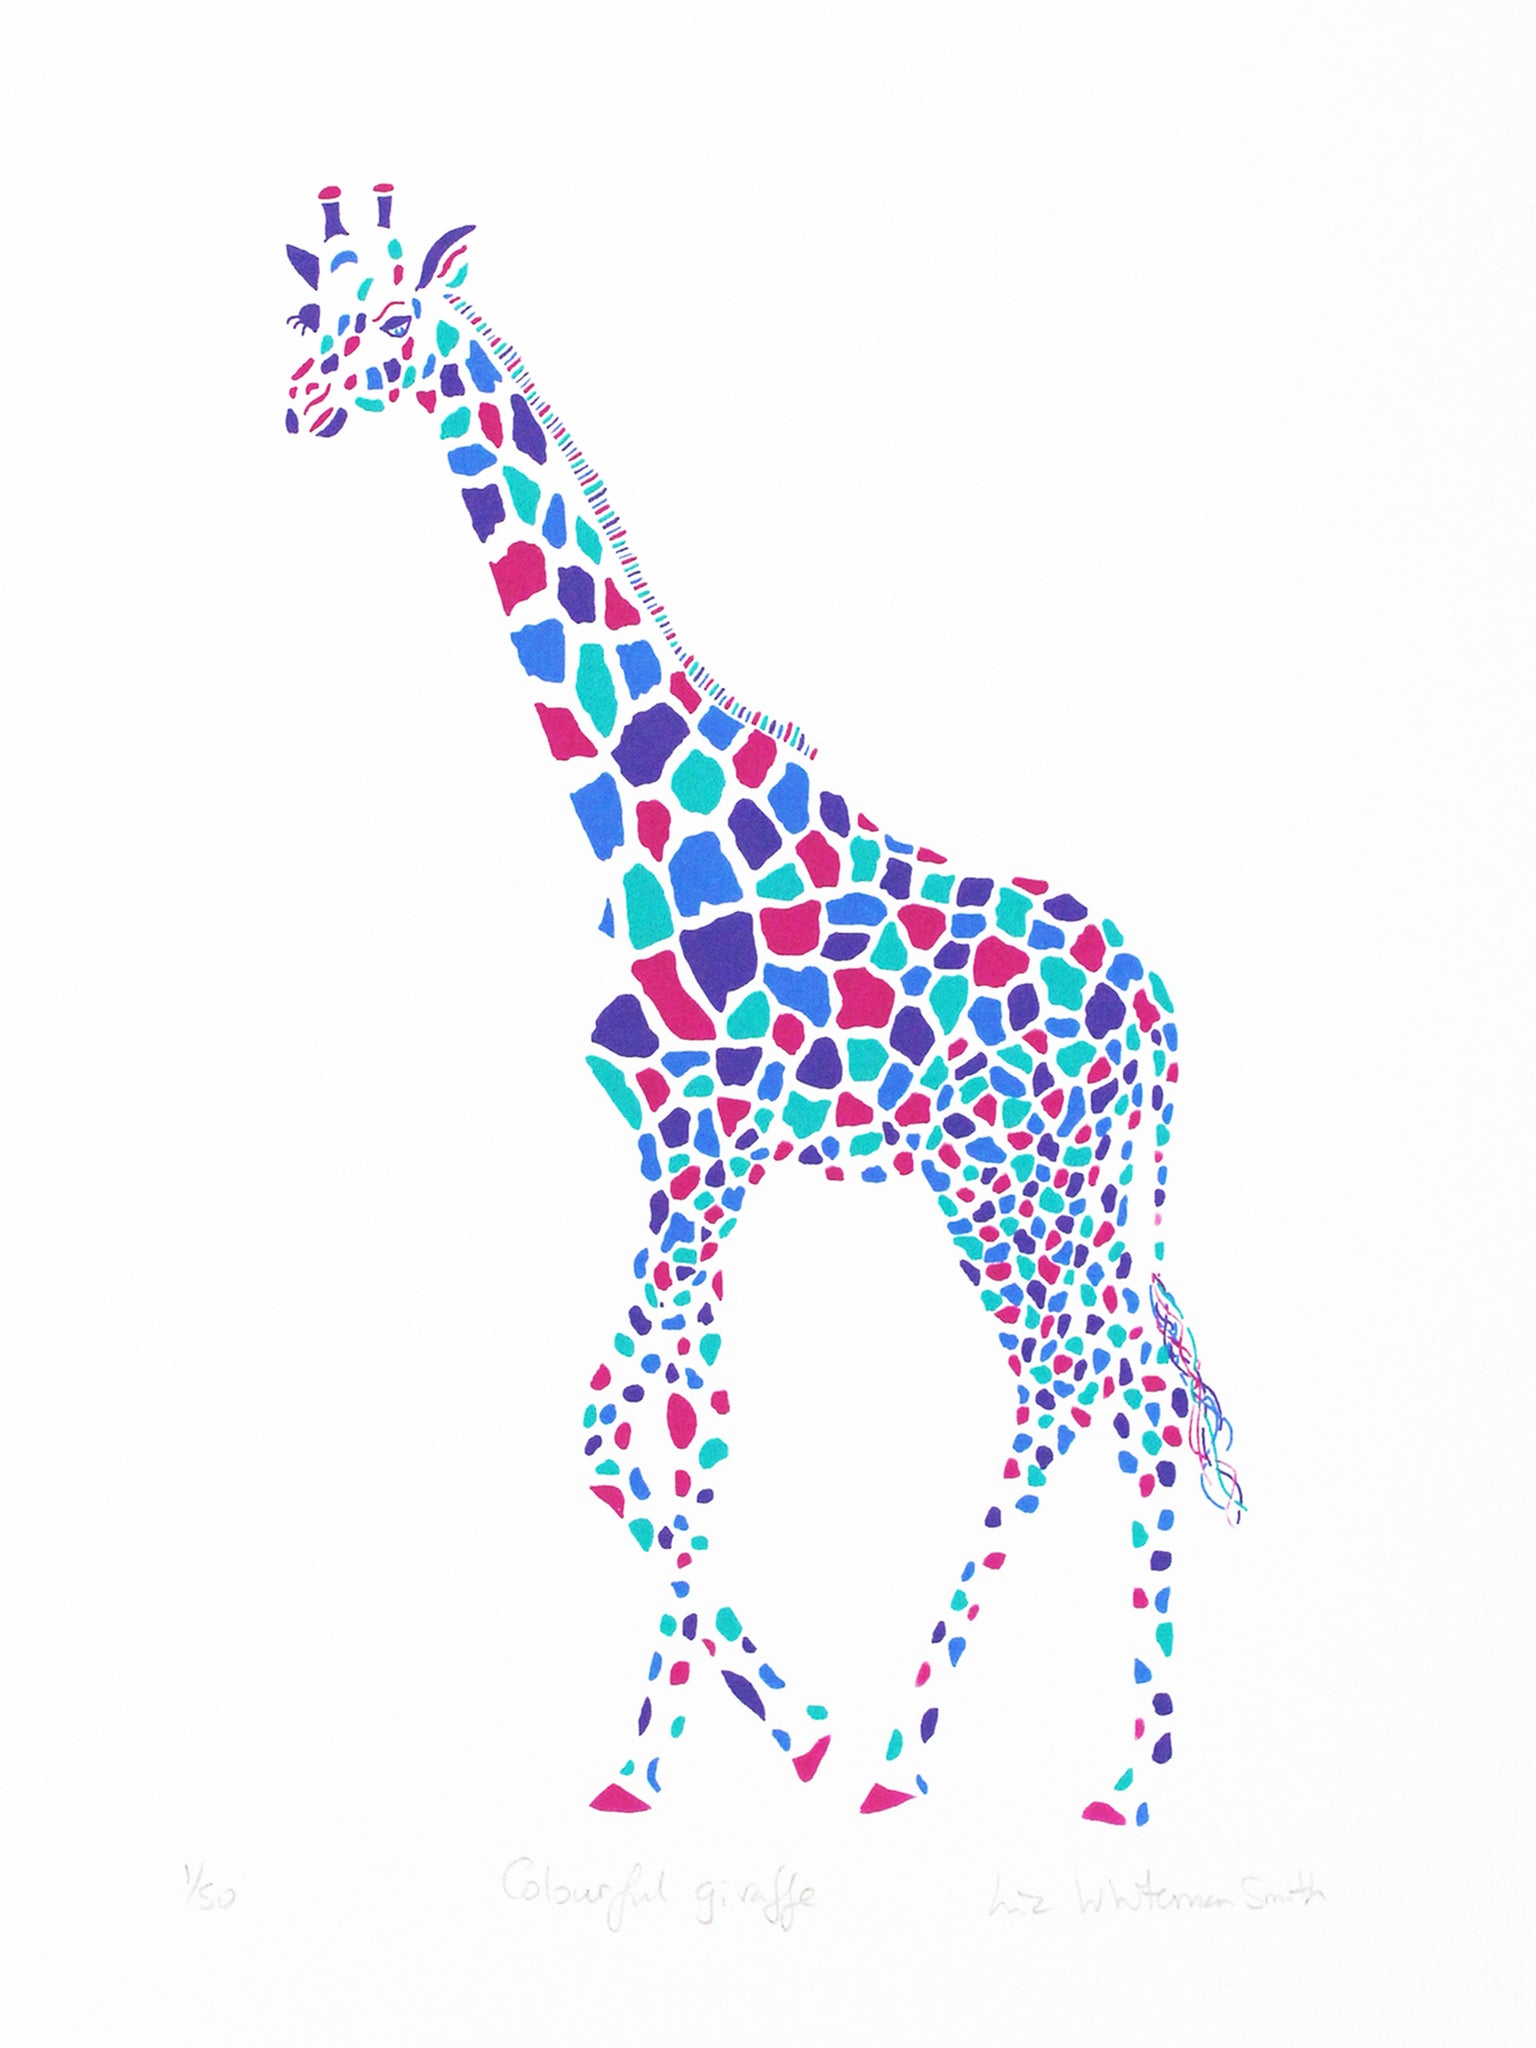 Colourful 4 colour screen print of a giraffe by Liz Whiteman Smith